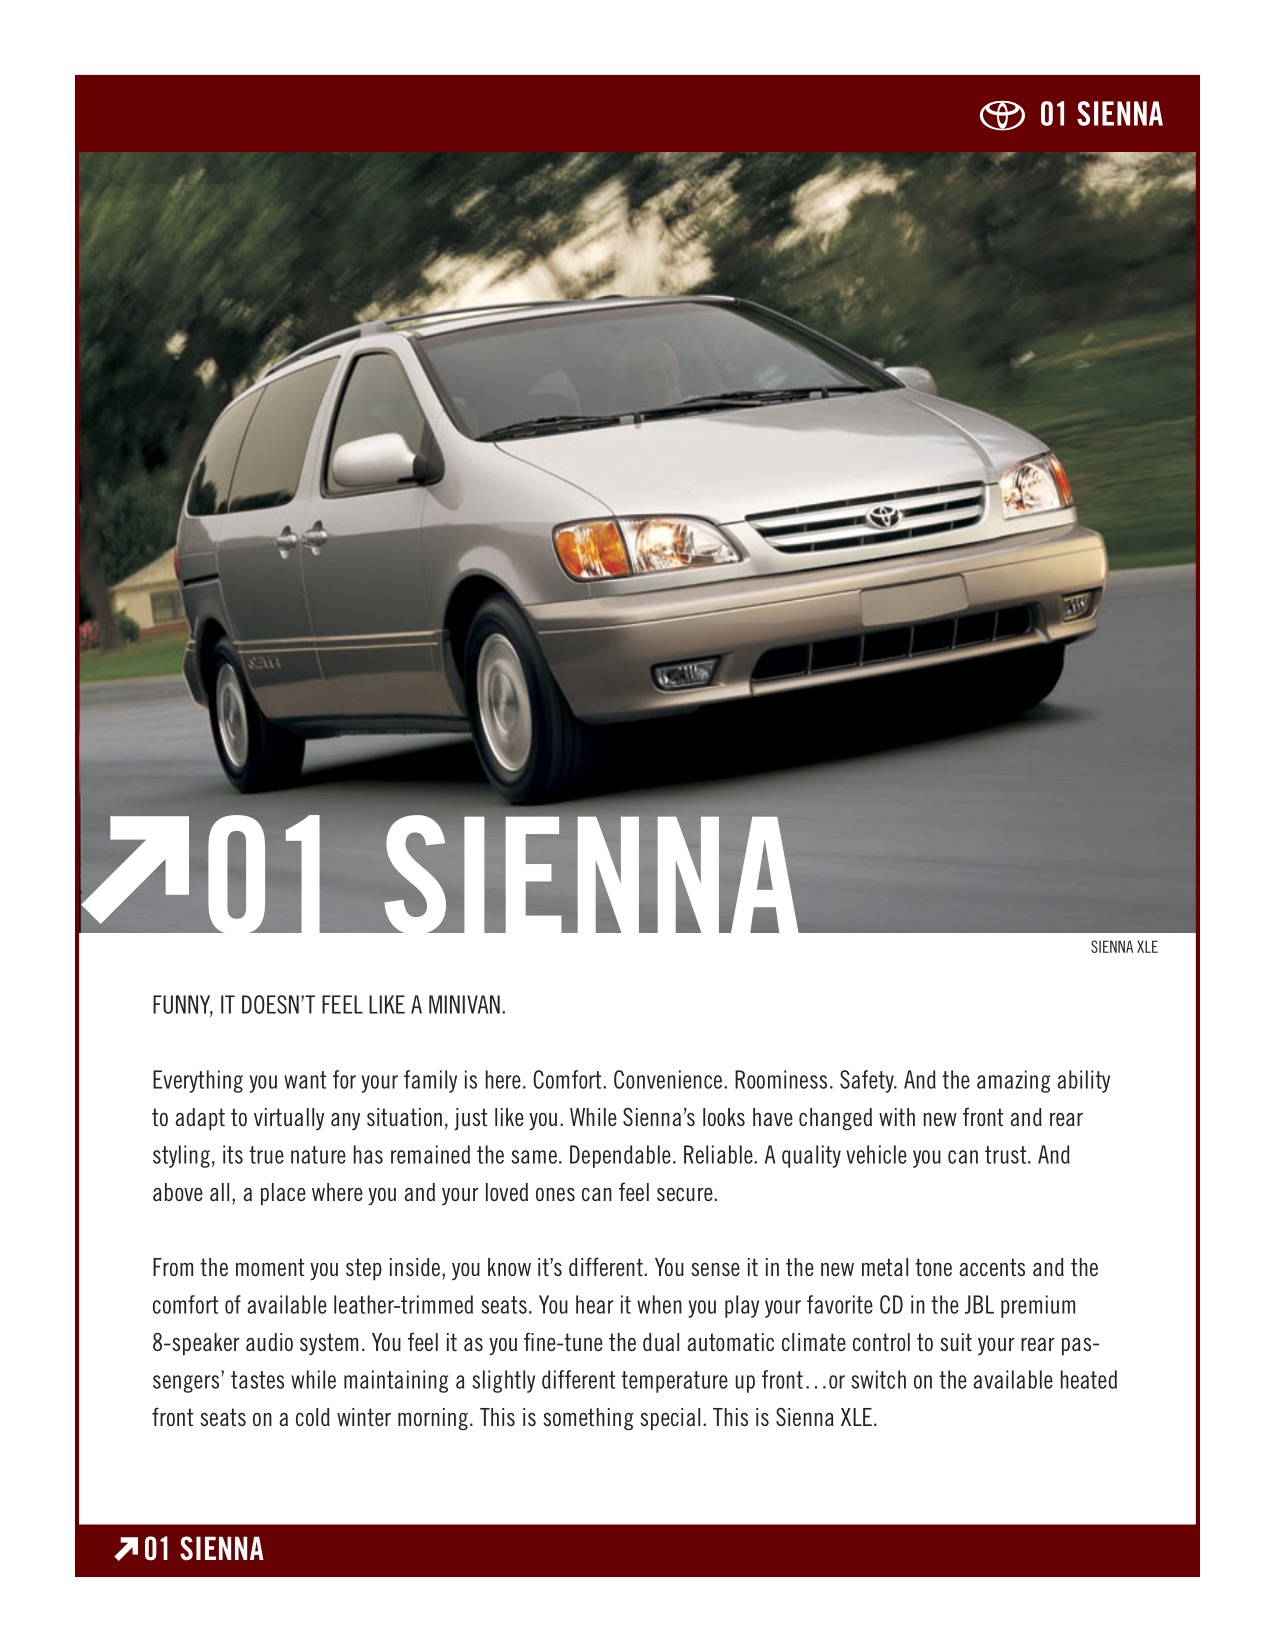 2001 Toyota Sienna Brochure